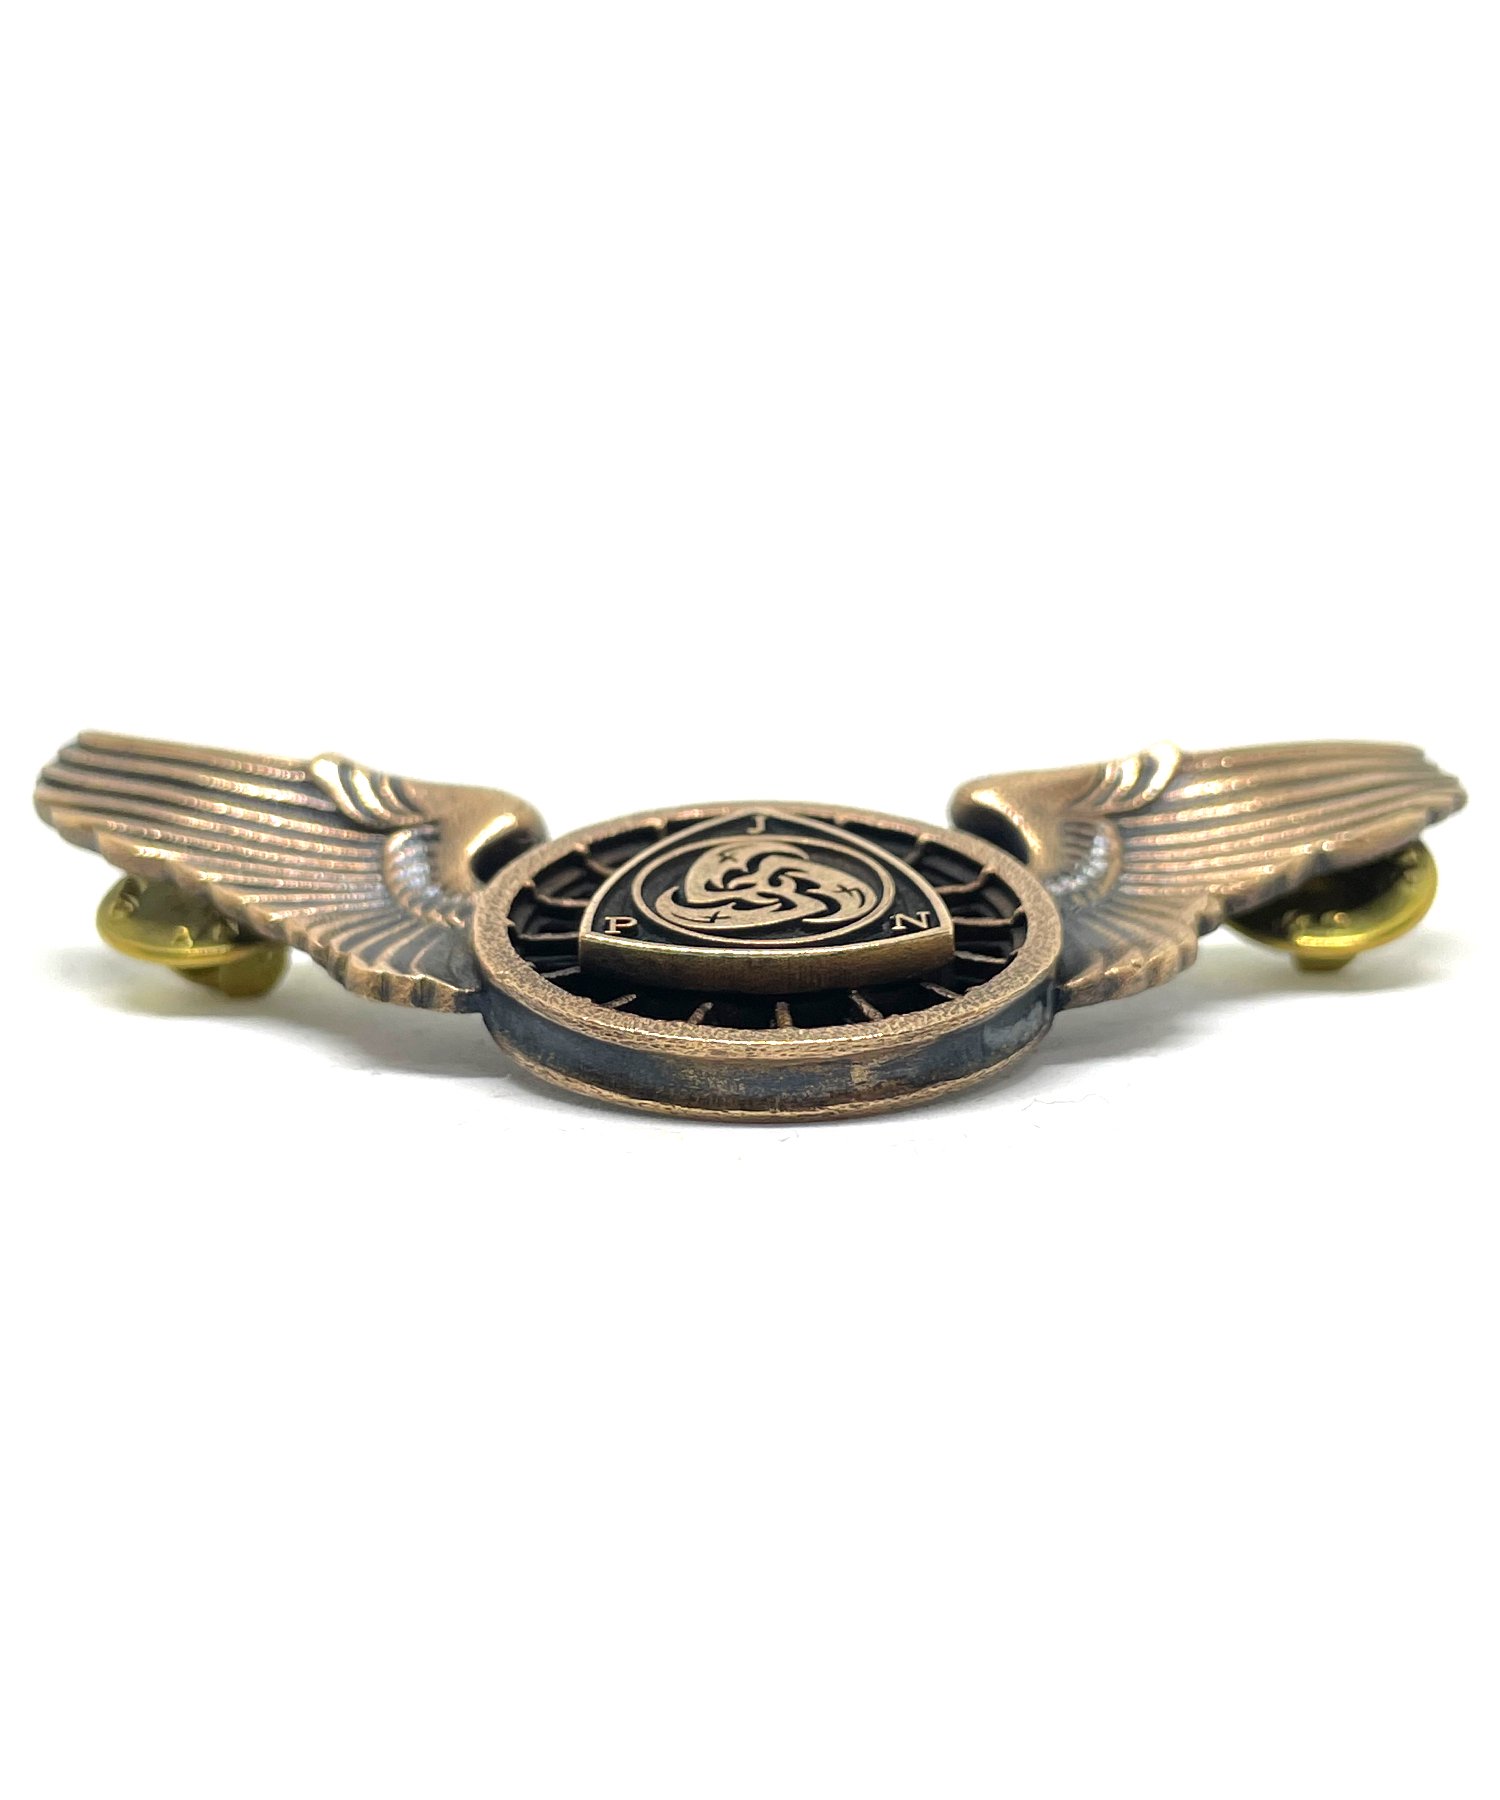 JUNK SMITH （ジャンクスミス）Flying Wheel Pins 【Copper alloy】